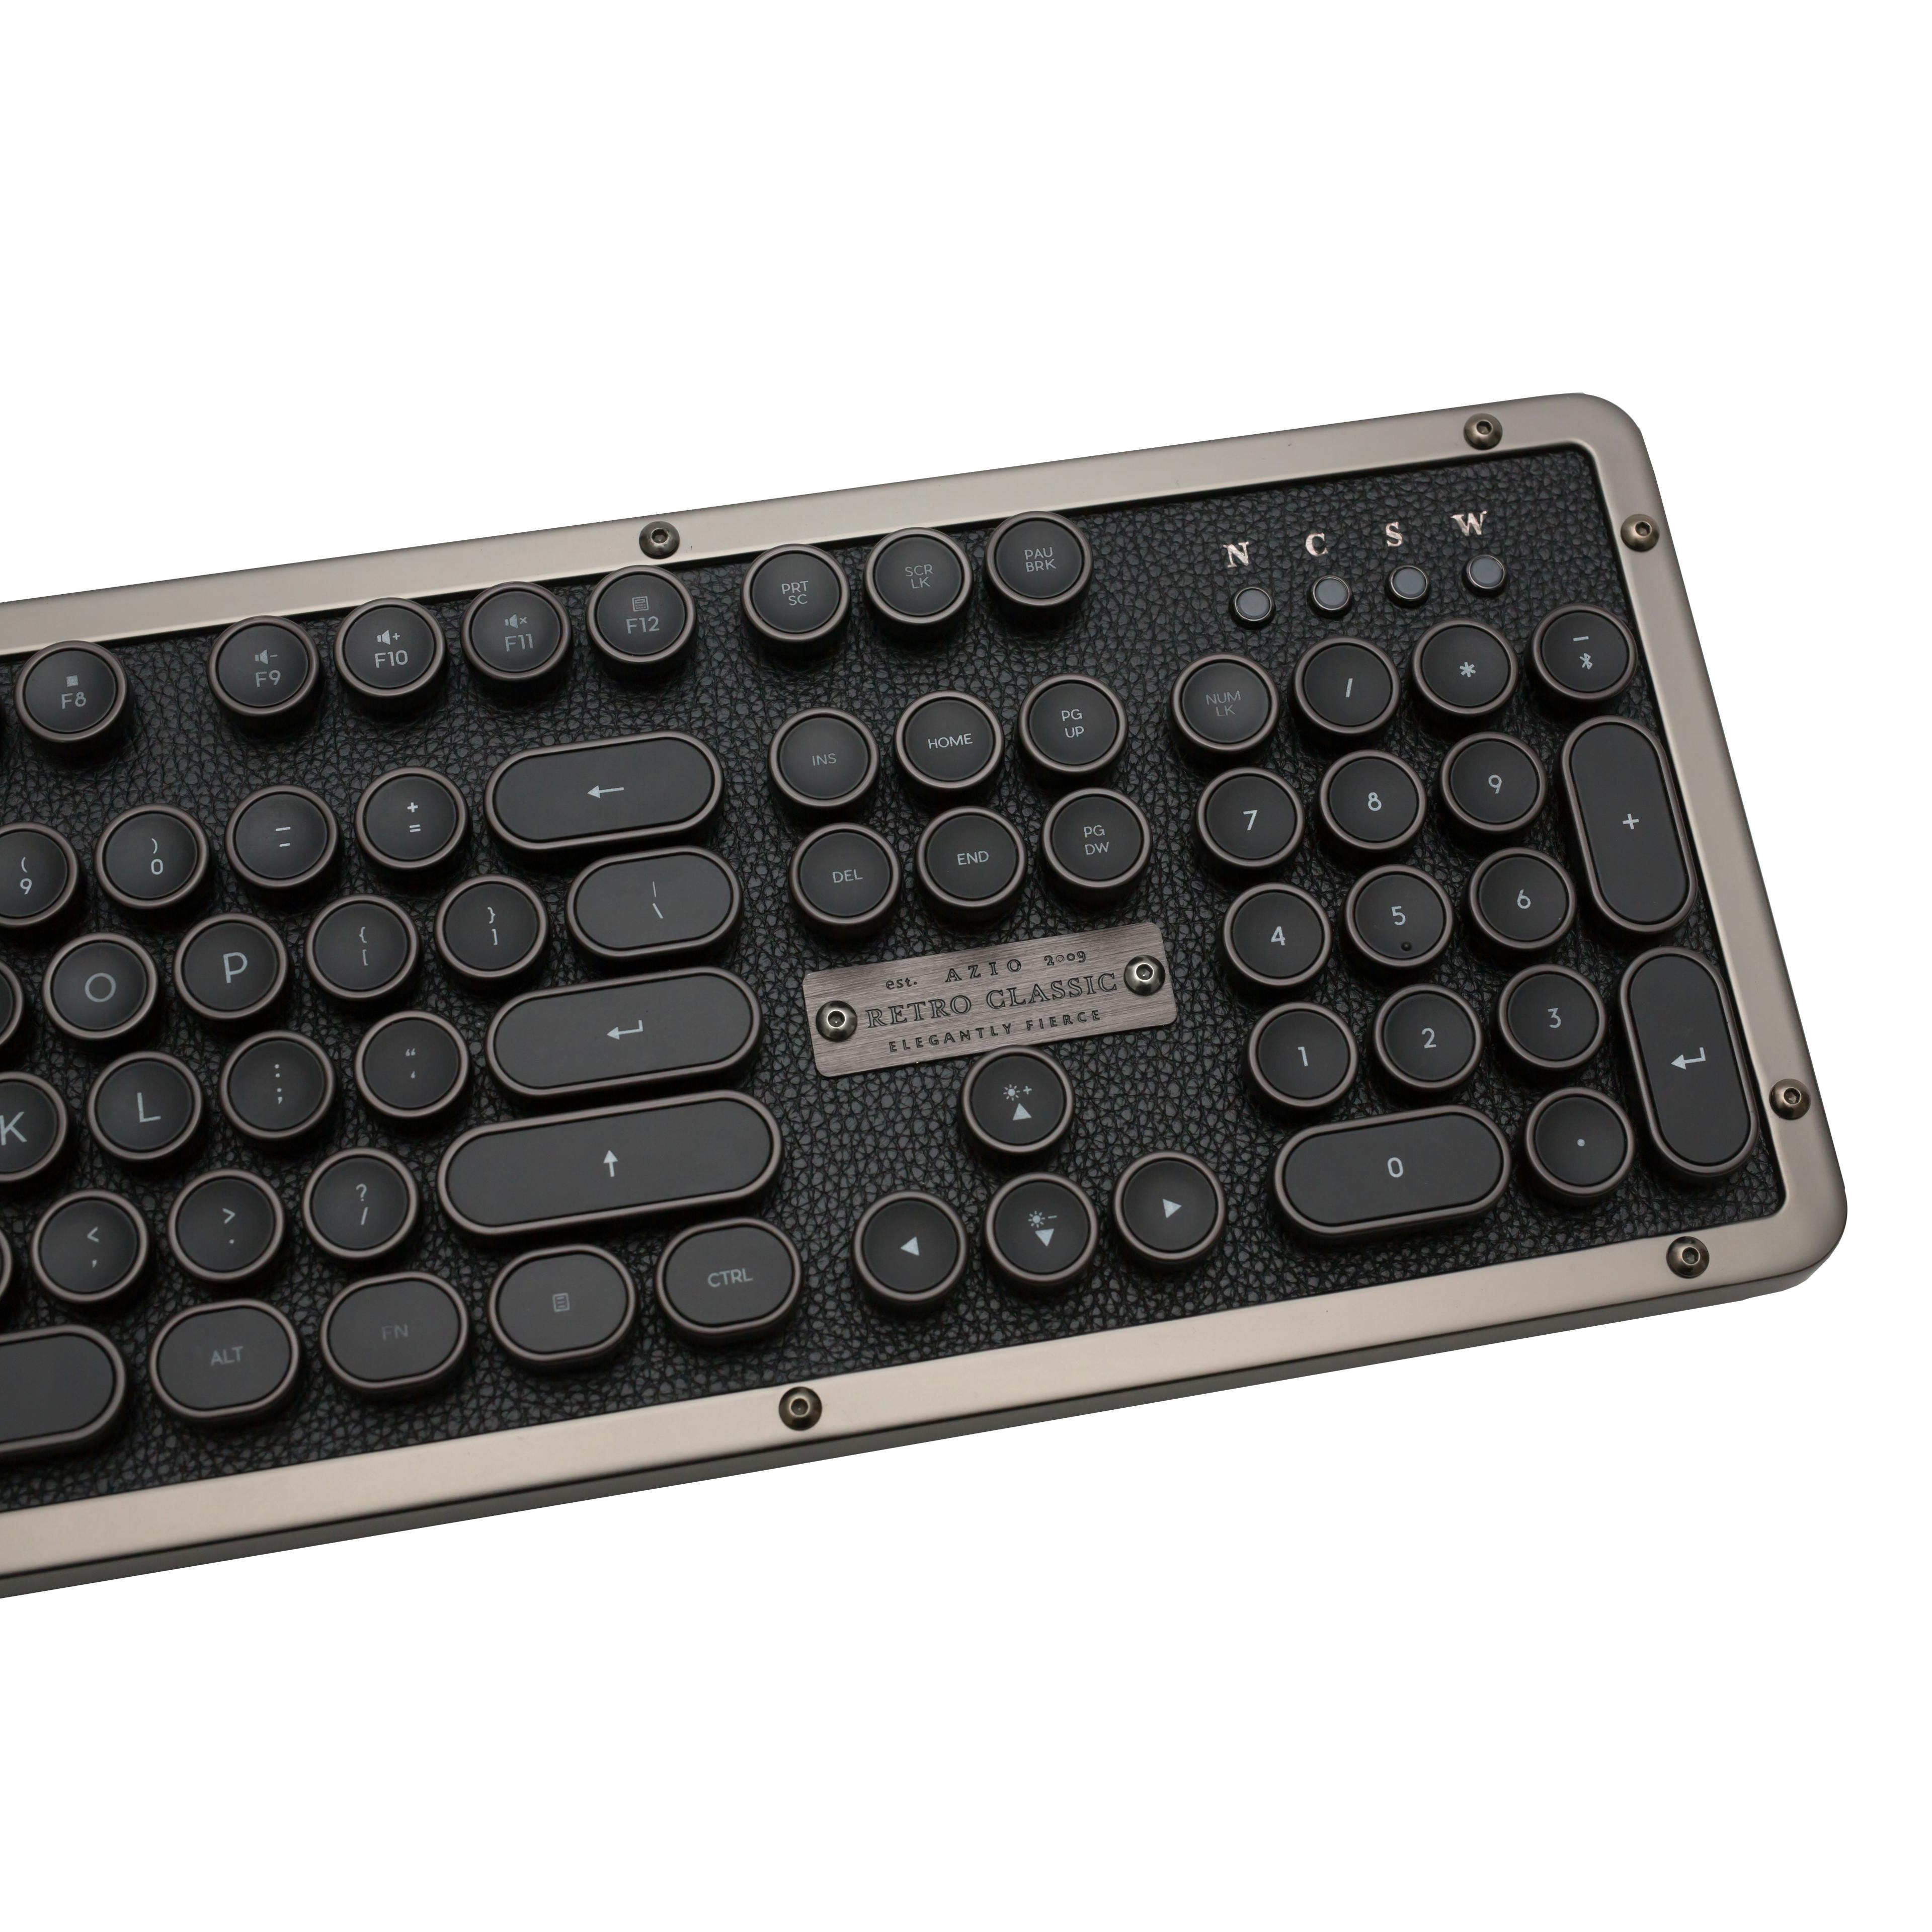 AZIO Retro Classic - Bluetooth Keyboard - Gunmetal, undefined